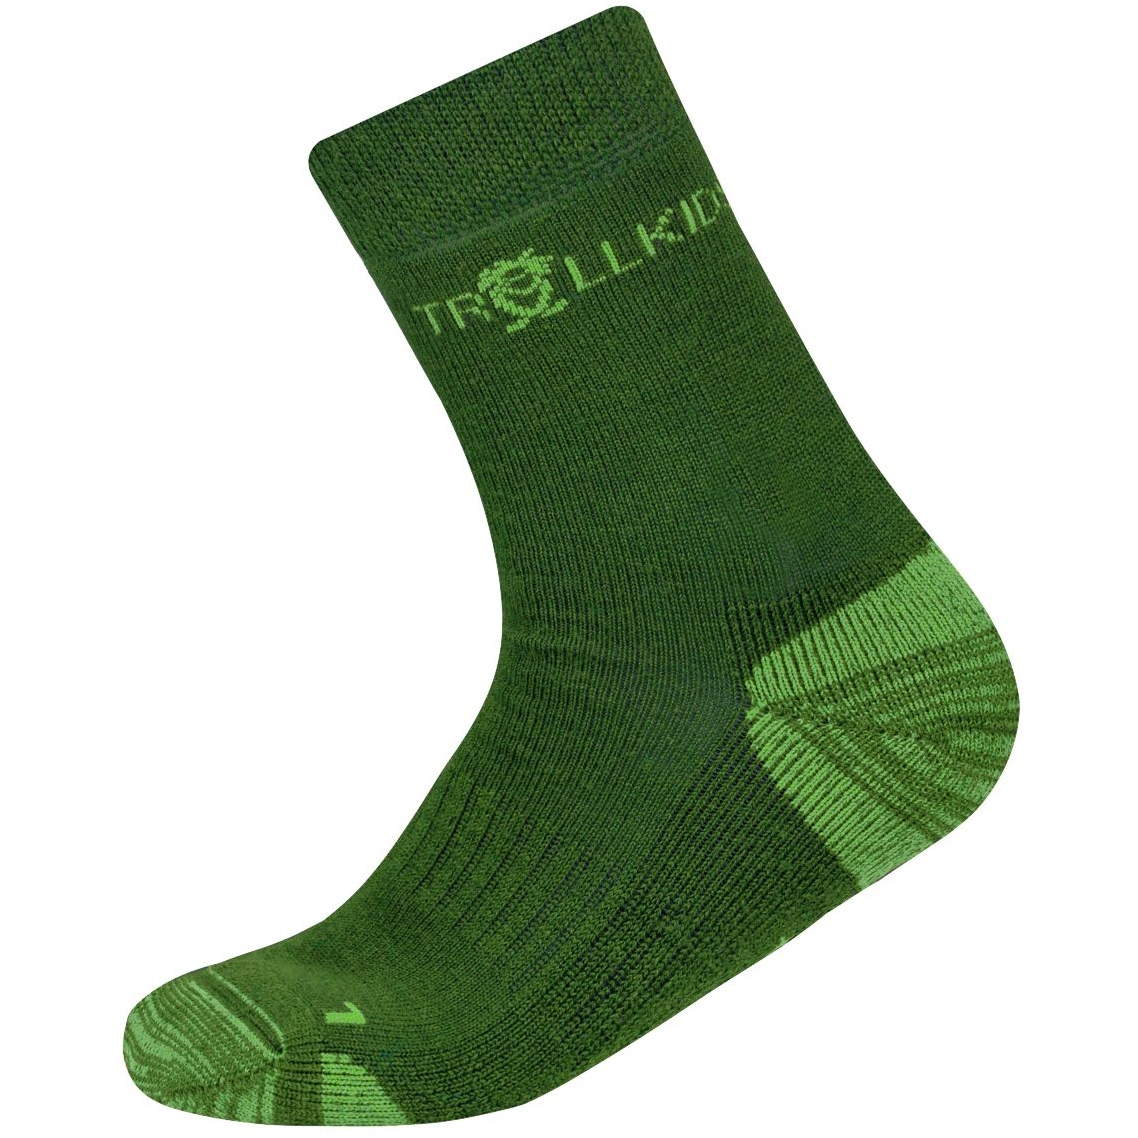 Picture of Trollkids Preikestolen Kids Hiking Socks - 2 Pack - Dark Green/Bright Green